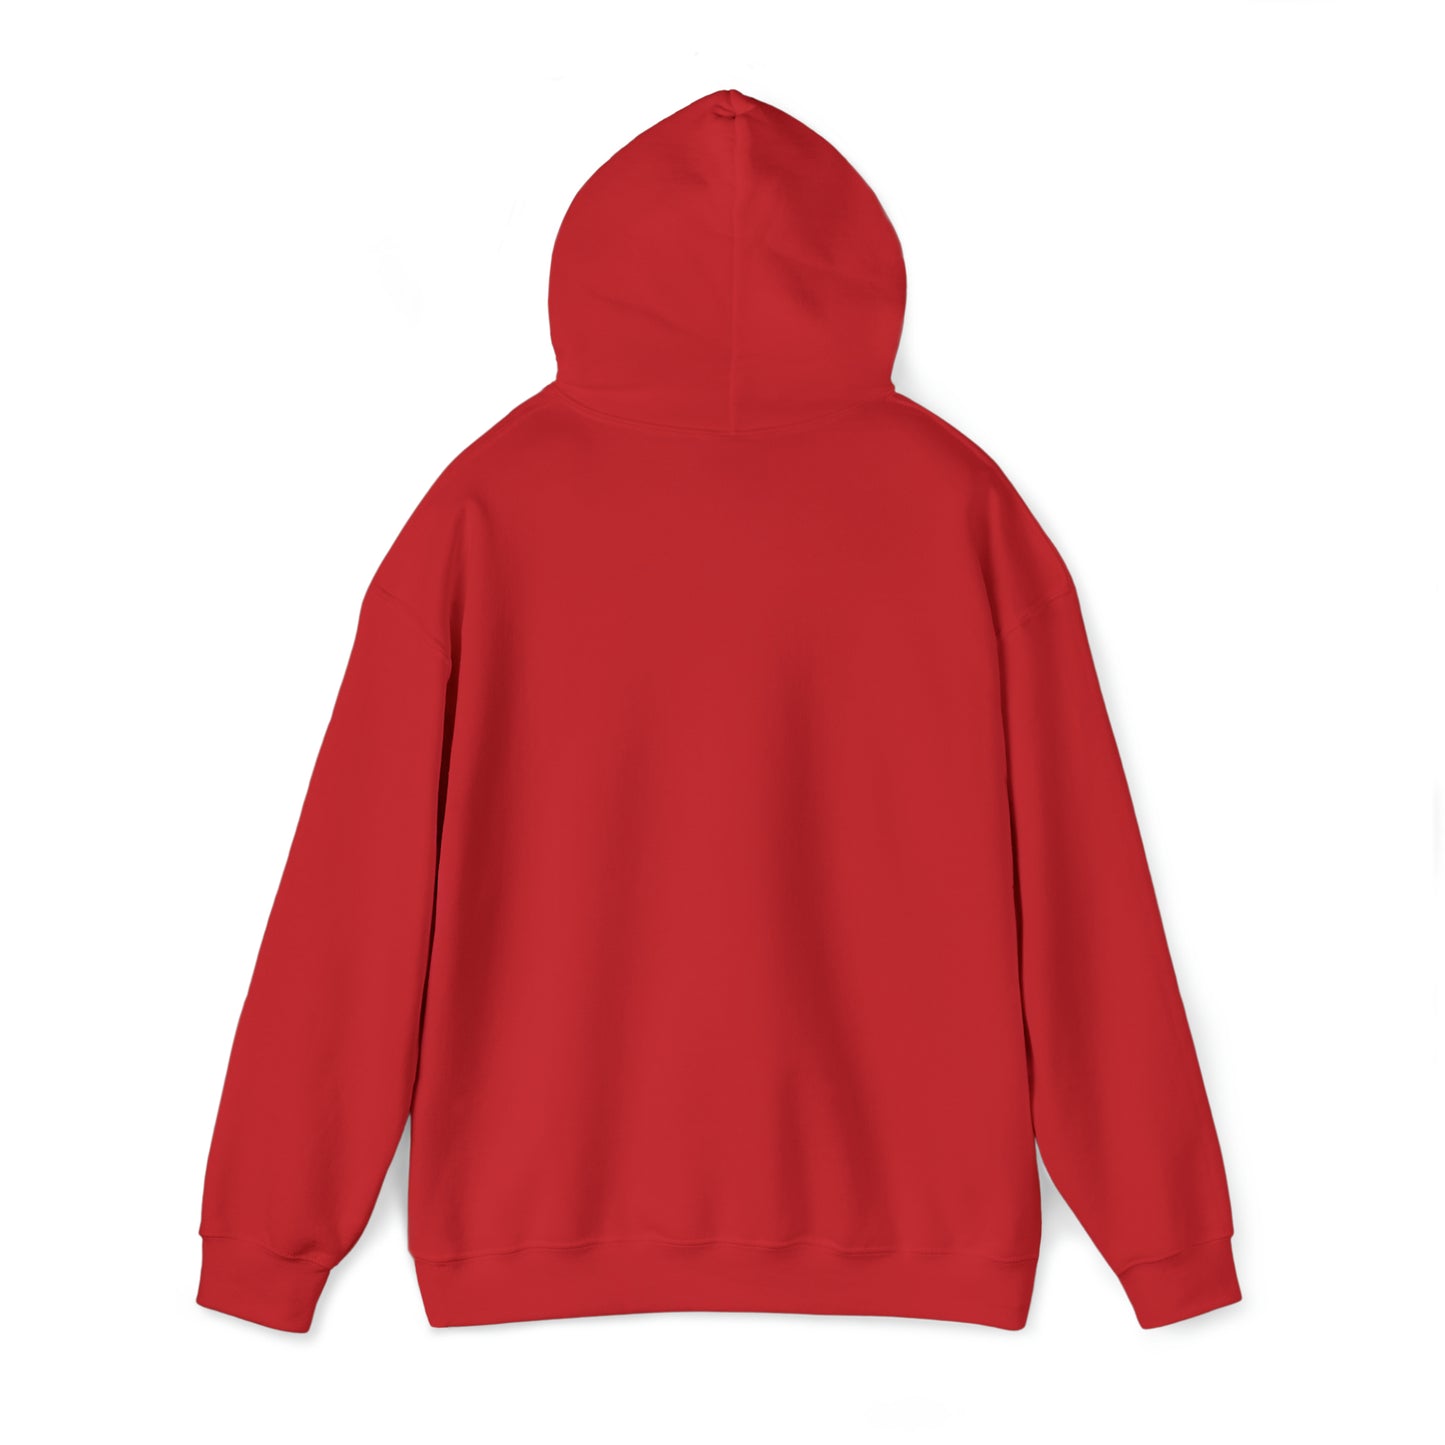 CyVison Scorpios VS Everybody Unisex Heavy Blend™ Hooded Sweatshirt